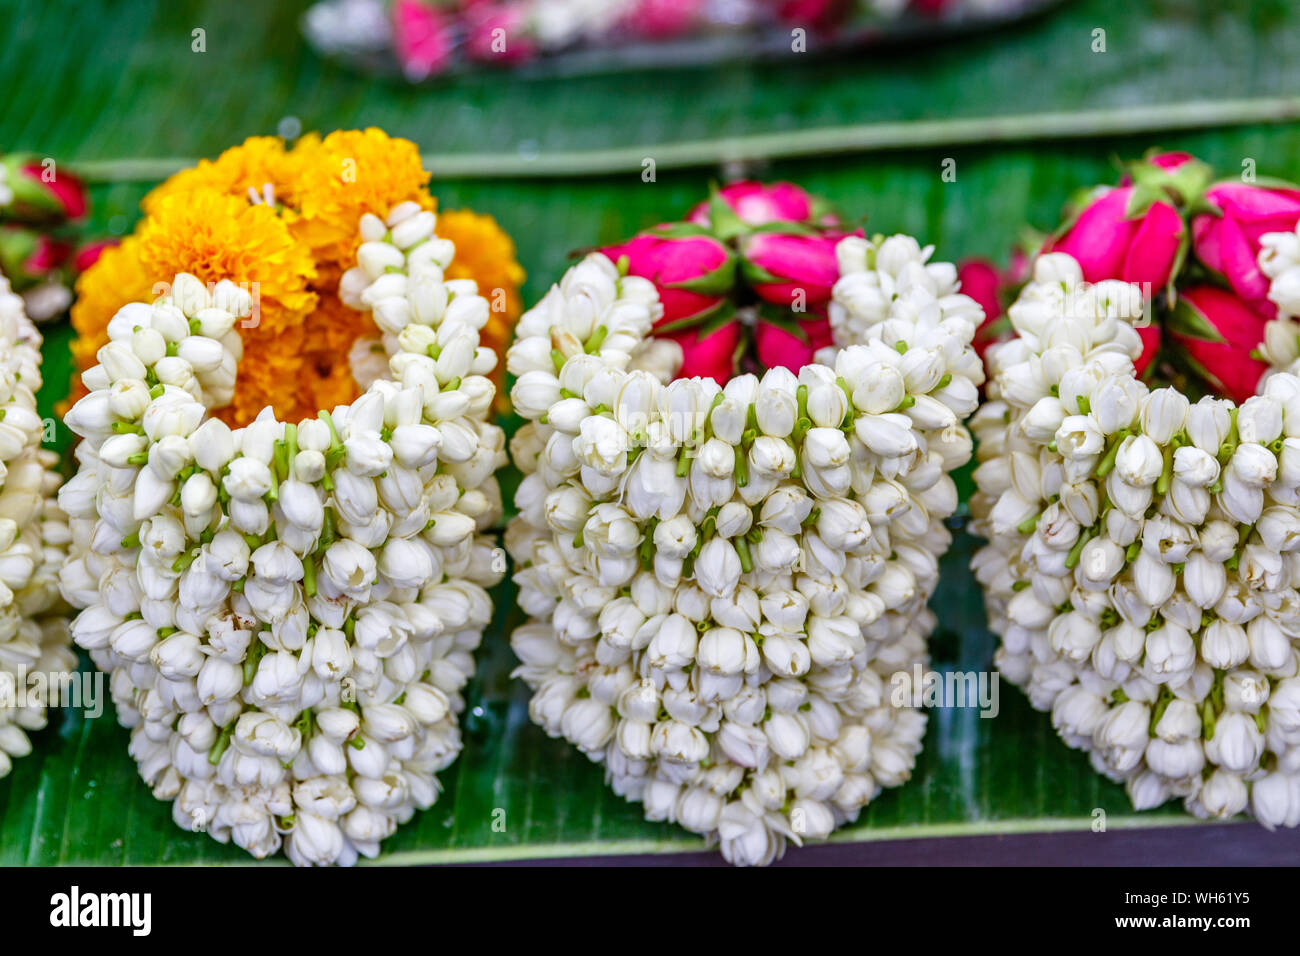 Various jasmine Phuang malai, traditional Thai flower garland offerings at Pak Khlong Talat, Bangkok flower market. Thailand. Stock Photo